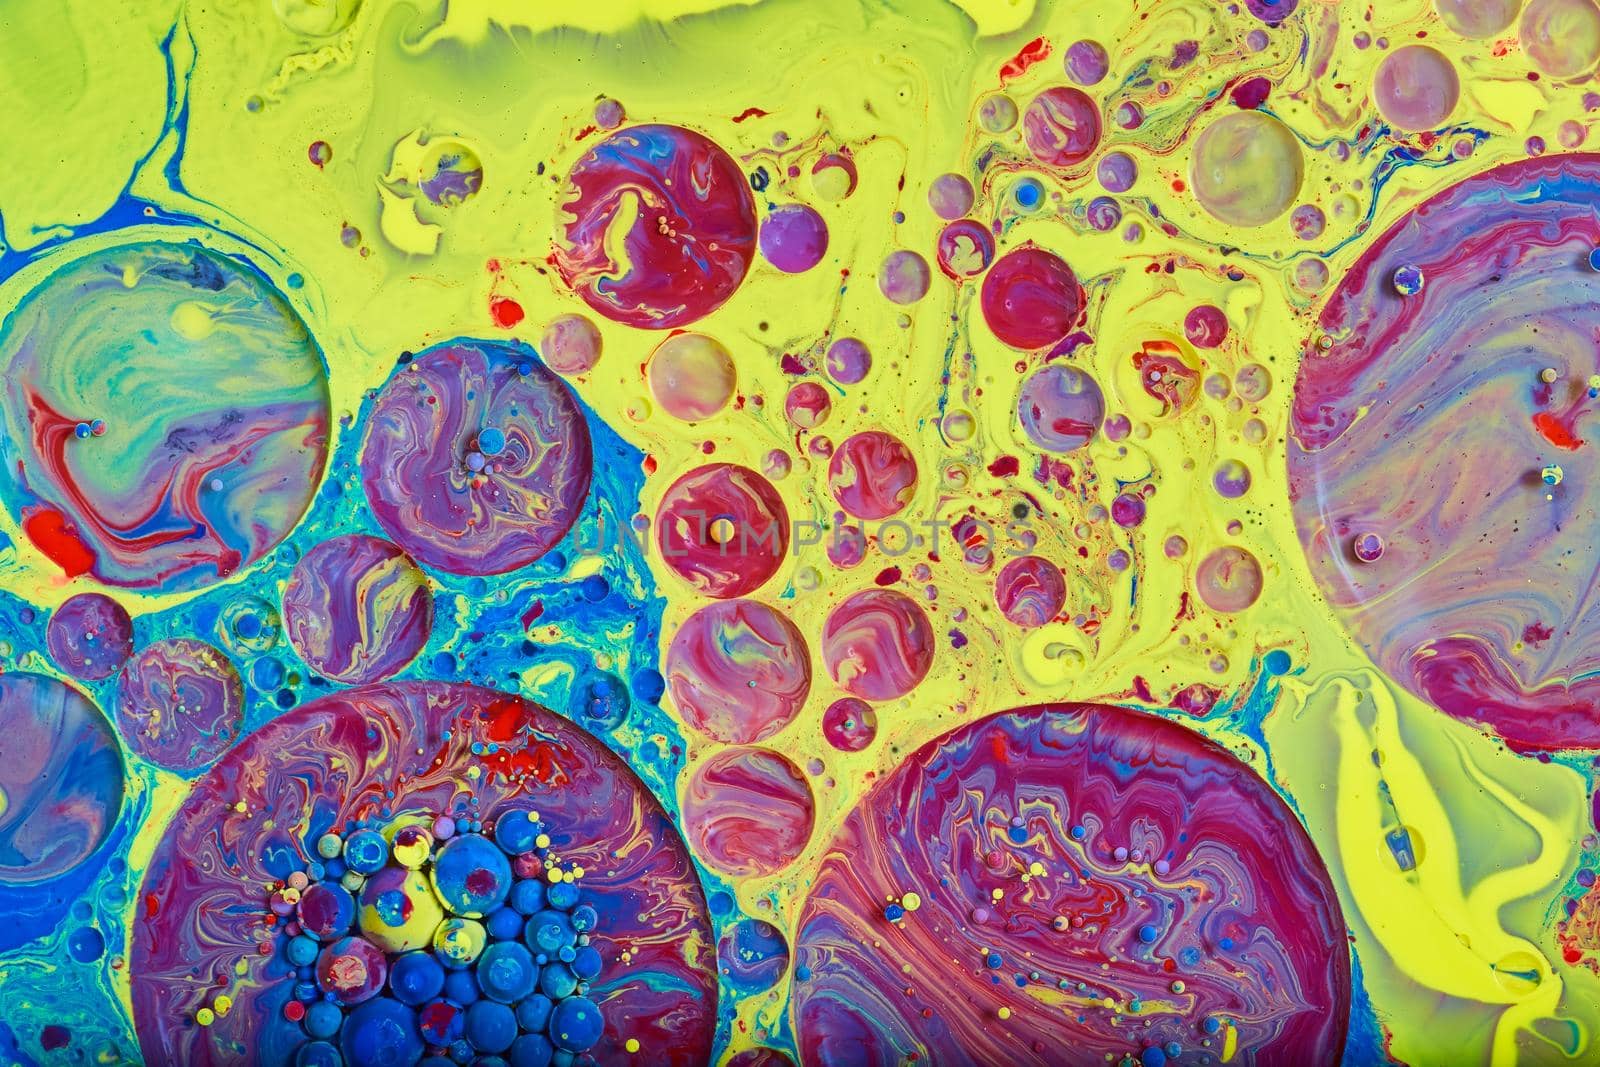 Image of Circles and spheres on rainbow unicorn surface of liquid